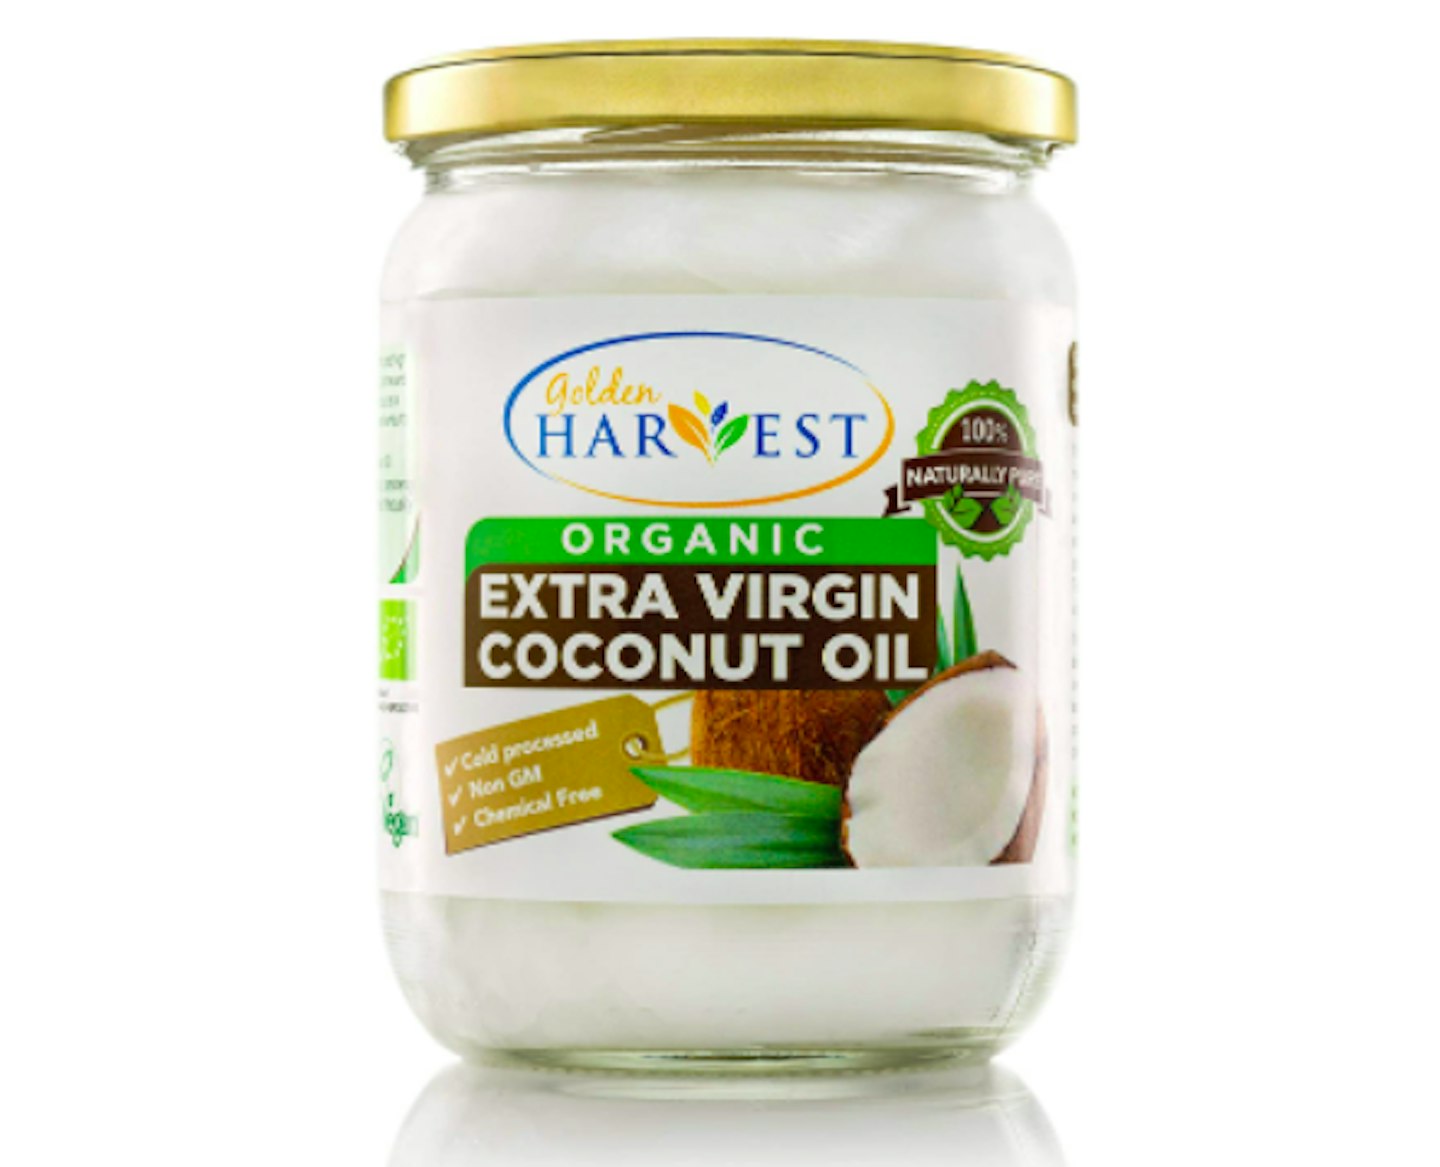 Golden Harvest Organic ExtraVirgin Coconut Oil